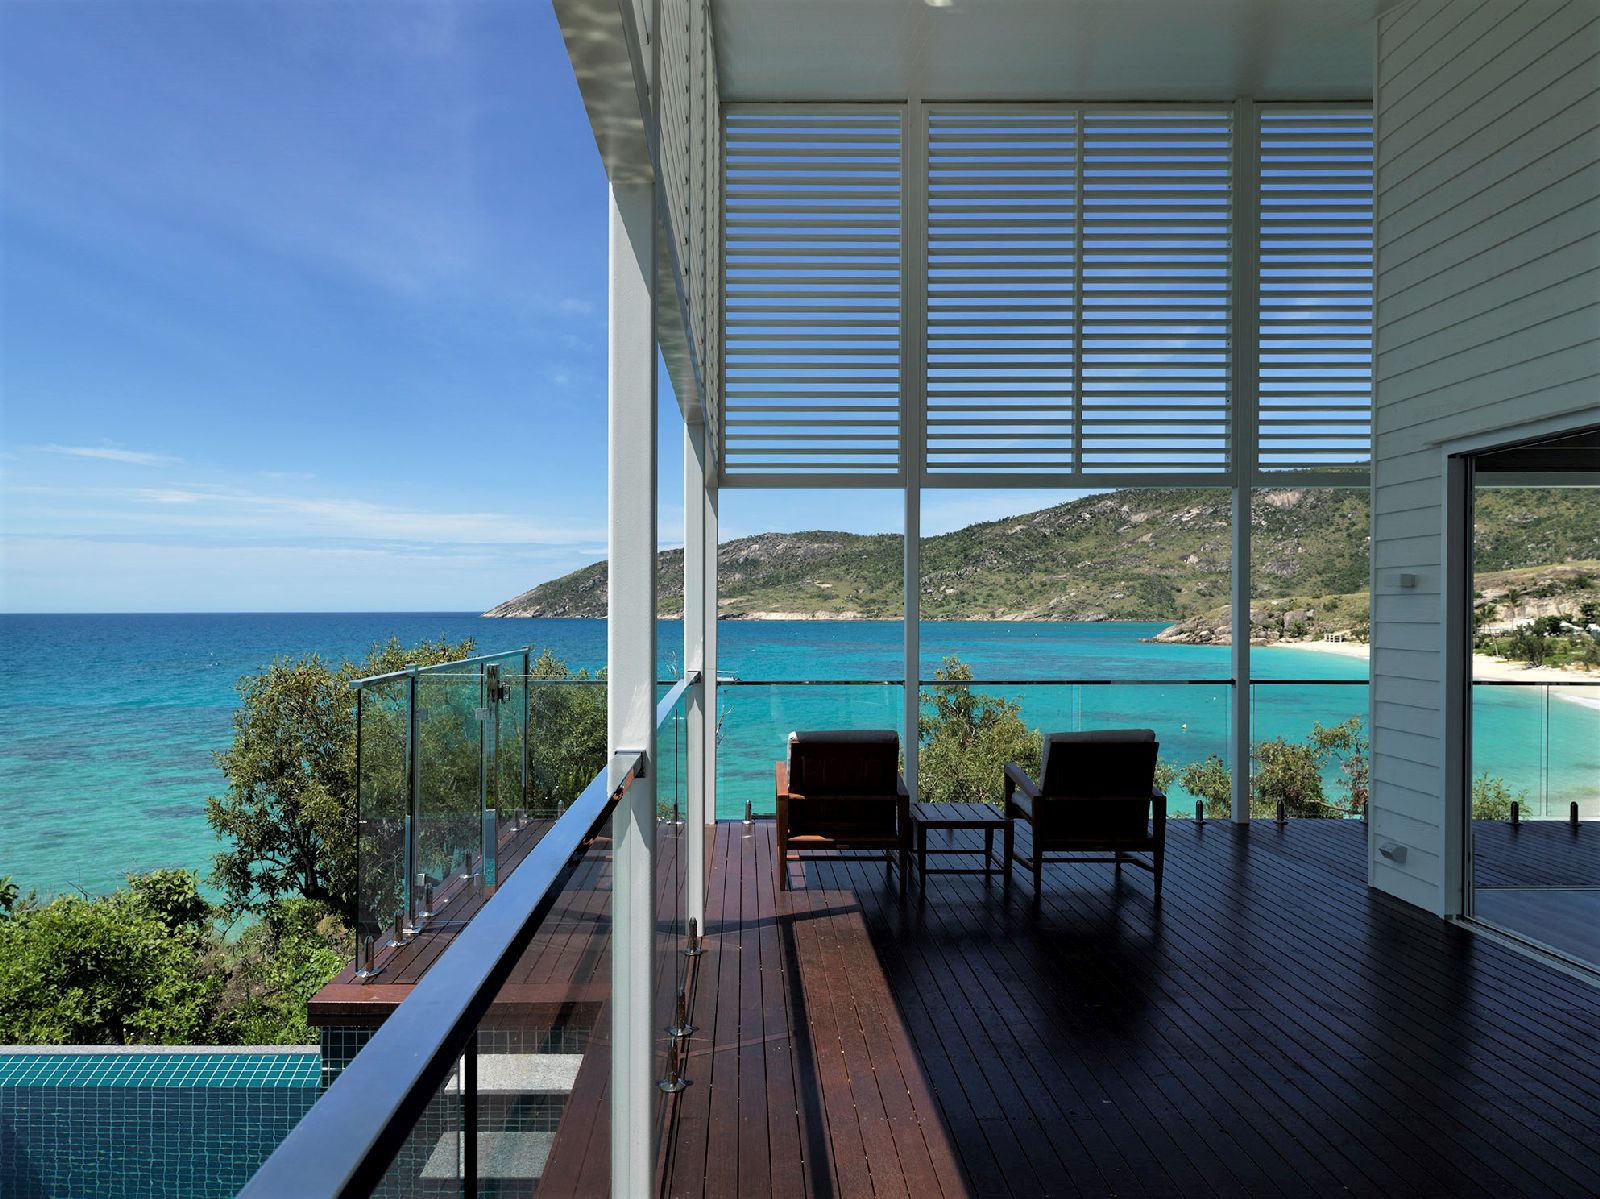 Ocean views from a villa deck at Lizard Island Resort on Australia's Great Barrier Reef